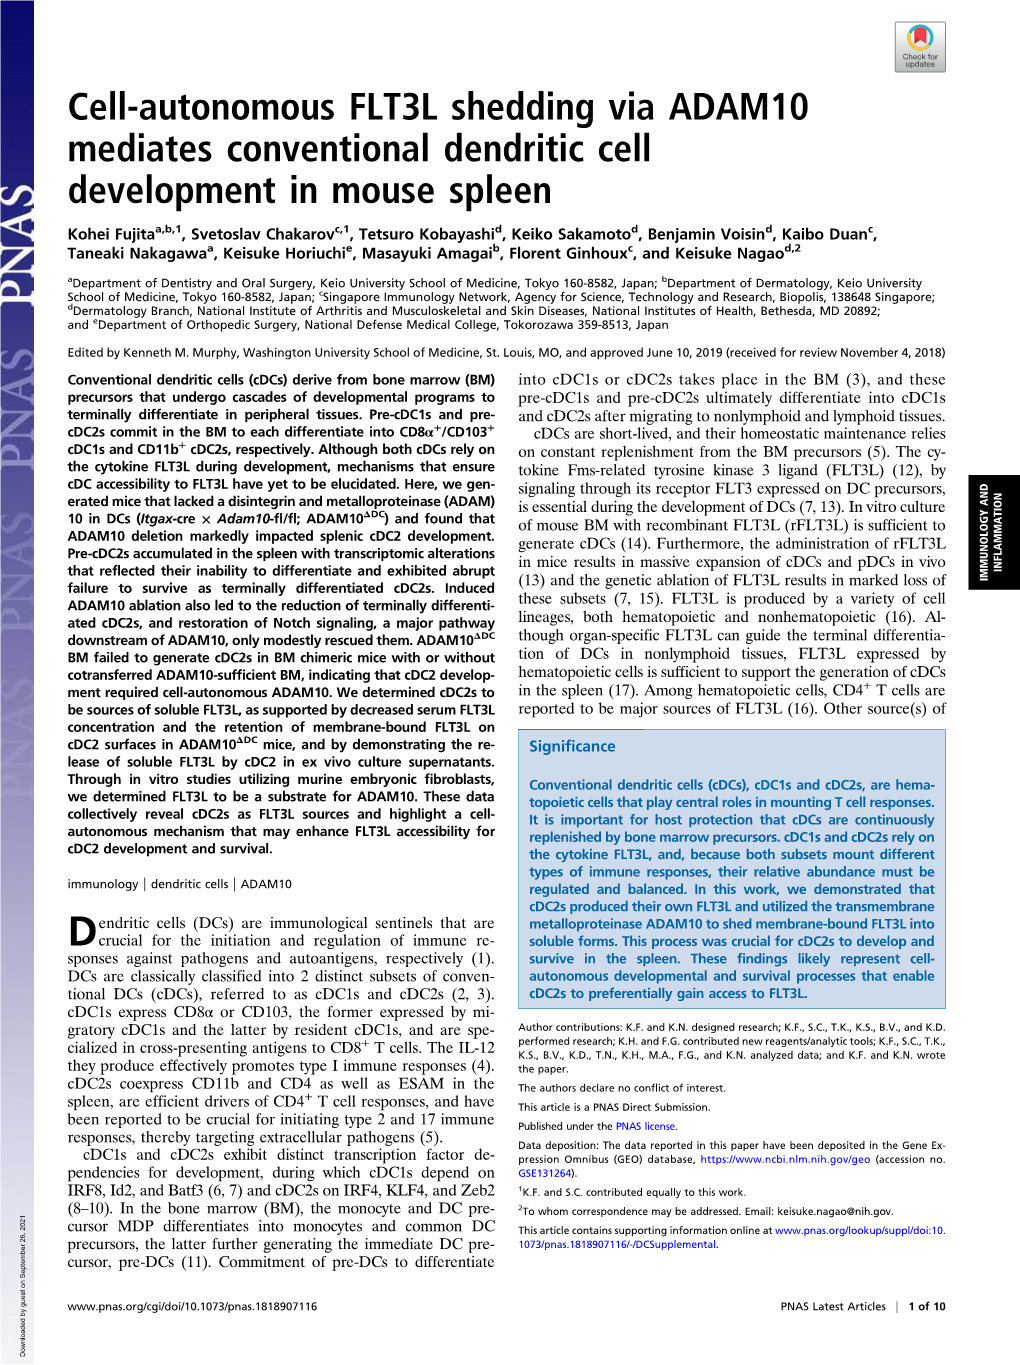 Cell-Autonomous FLT3L Shedding Via ADAM10 Mediates Conventional Dendritic Cell Development in Mouse Spleen